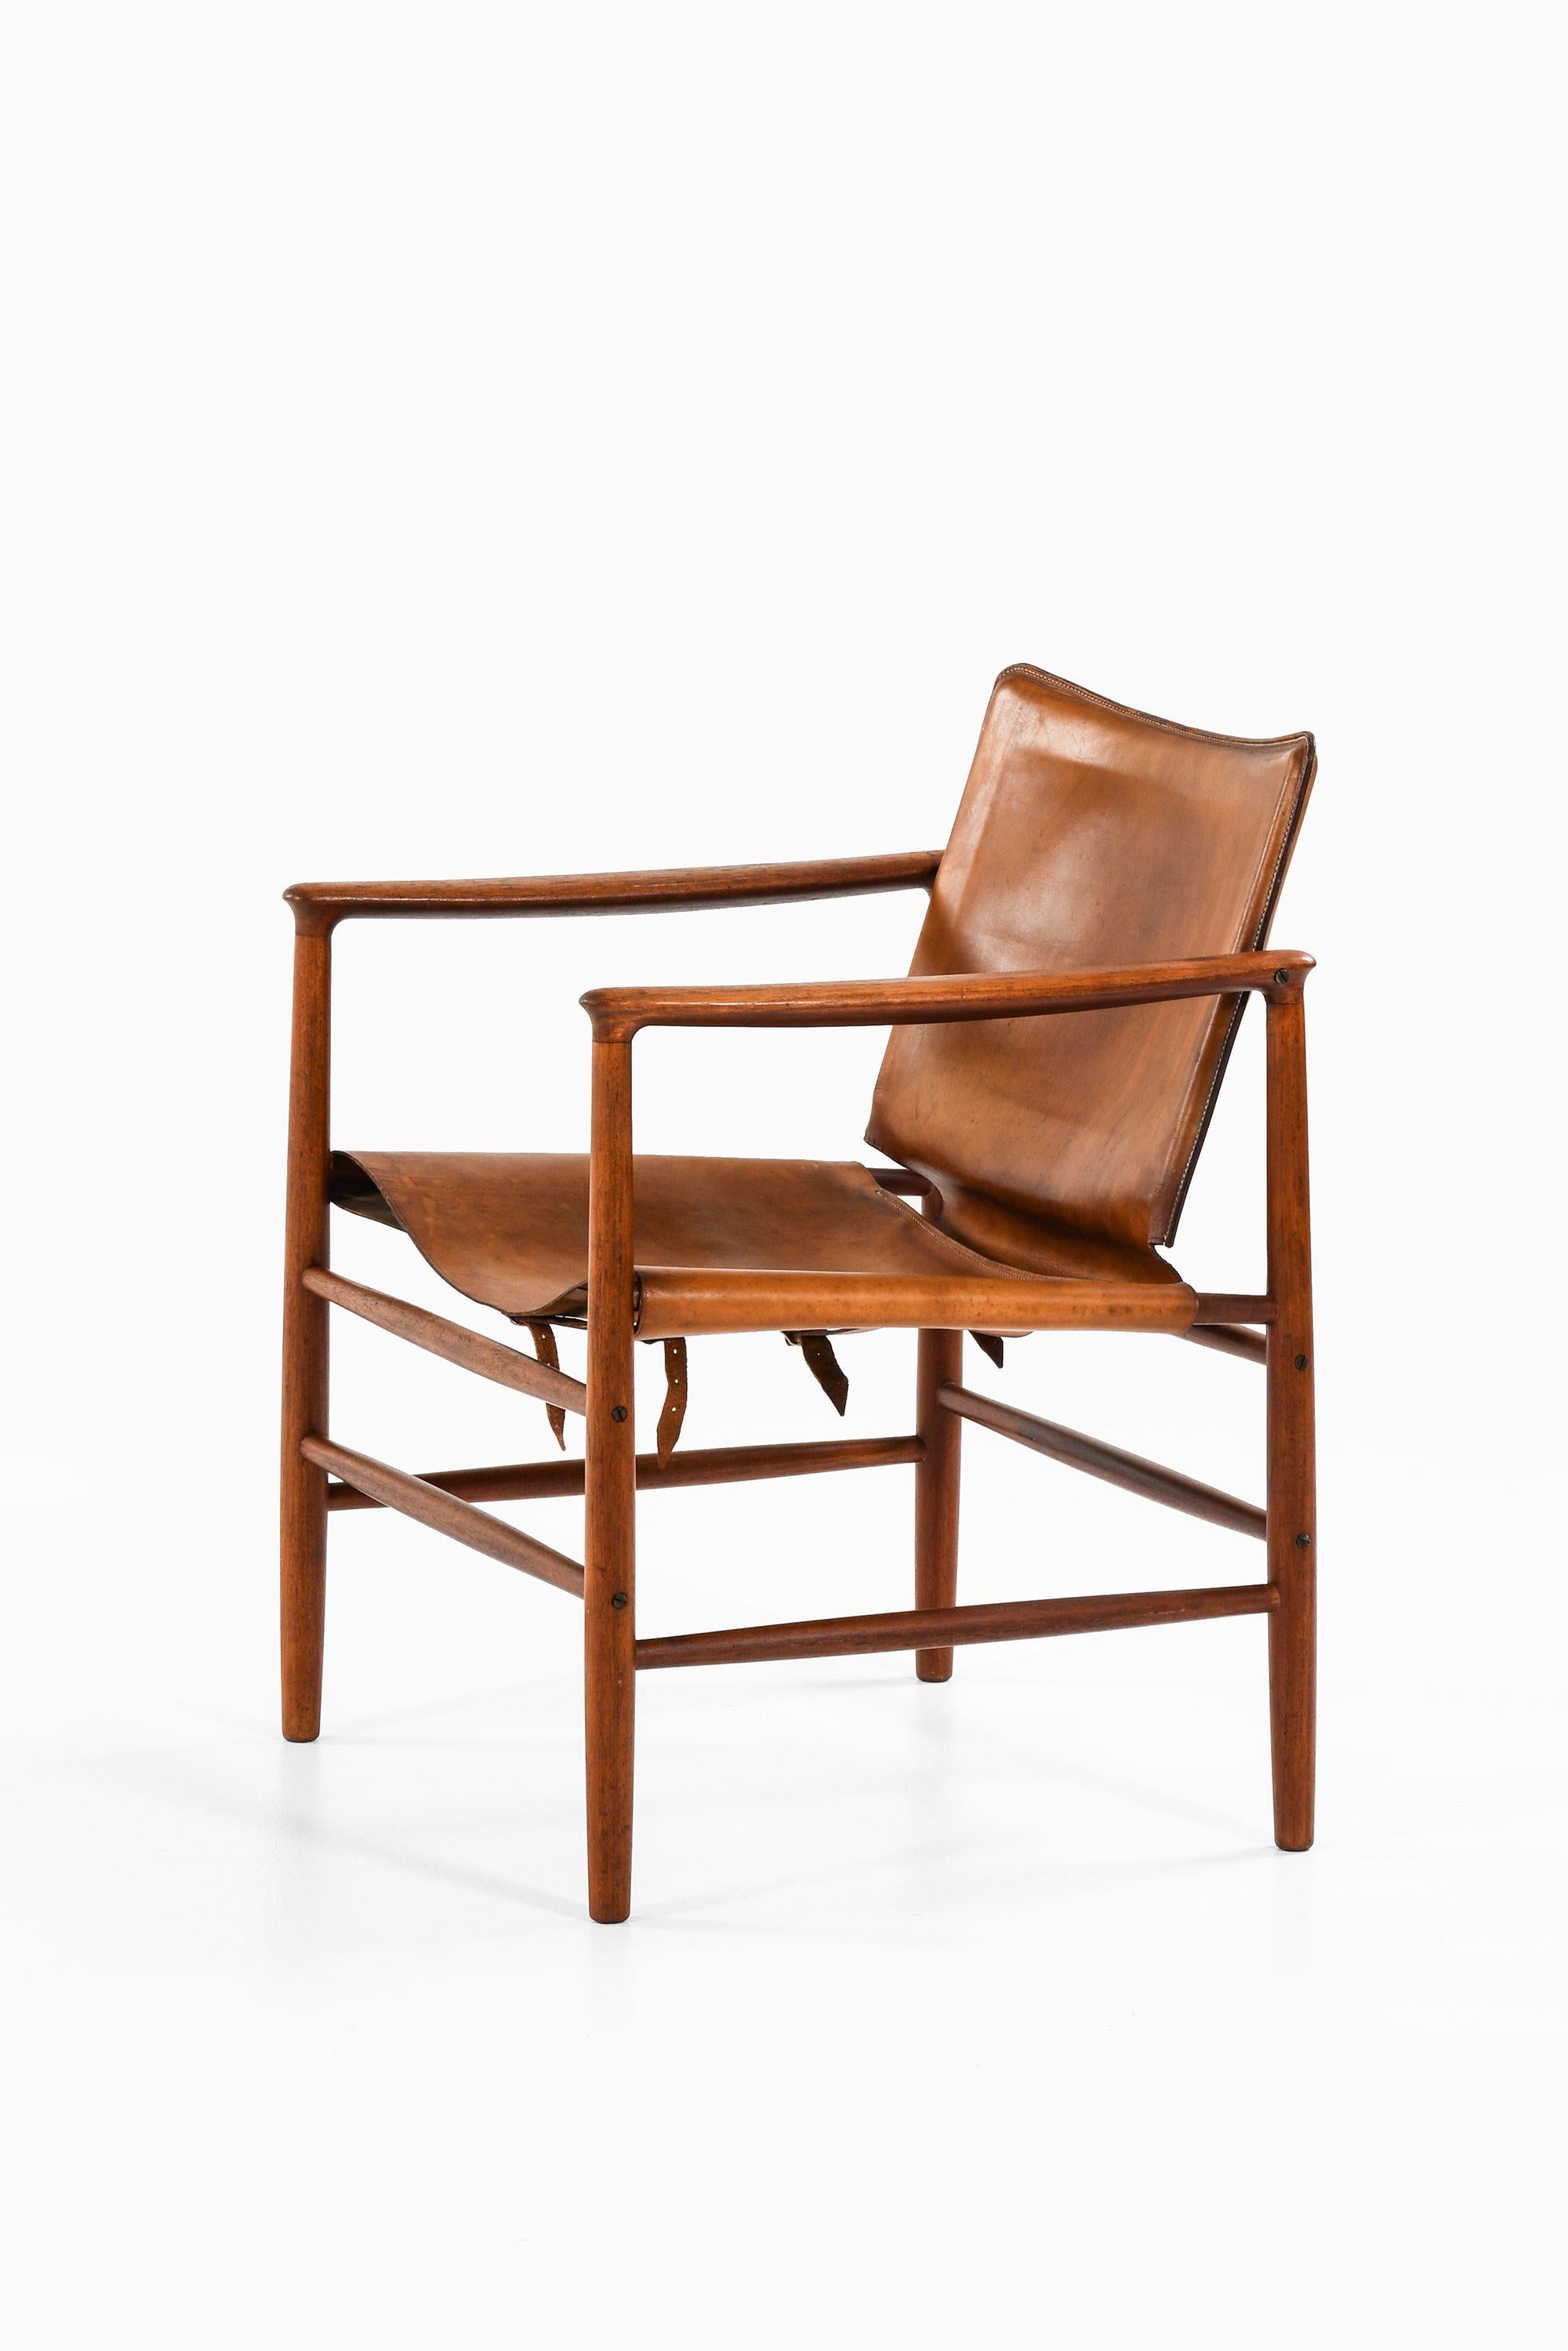 Scandinavian Modern Armchair in Teak and Leather by Kai Lyngfeldt Larsen, 1957 For Sale